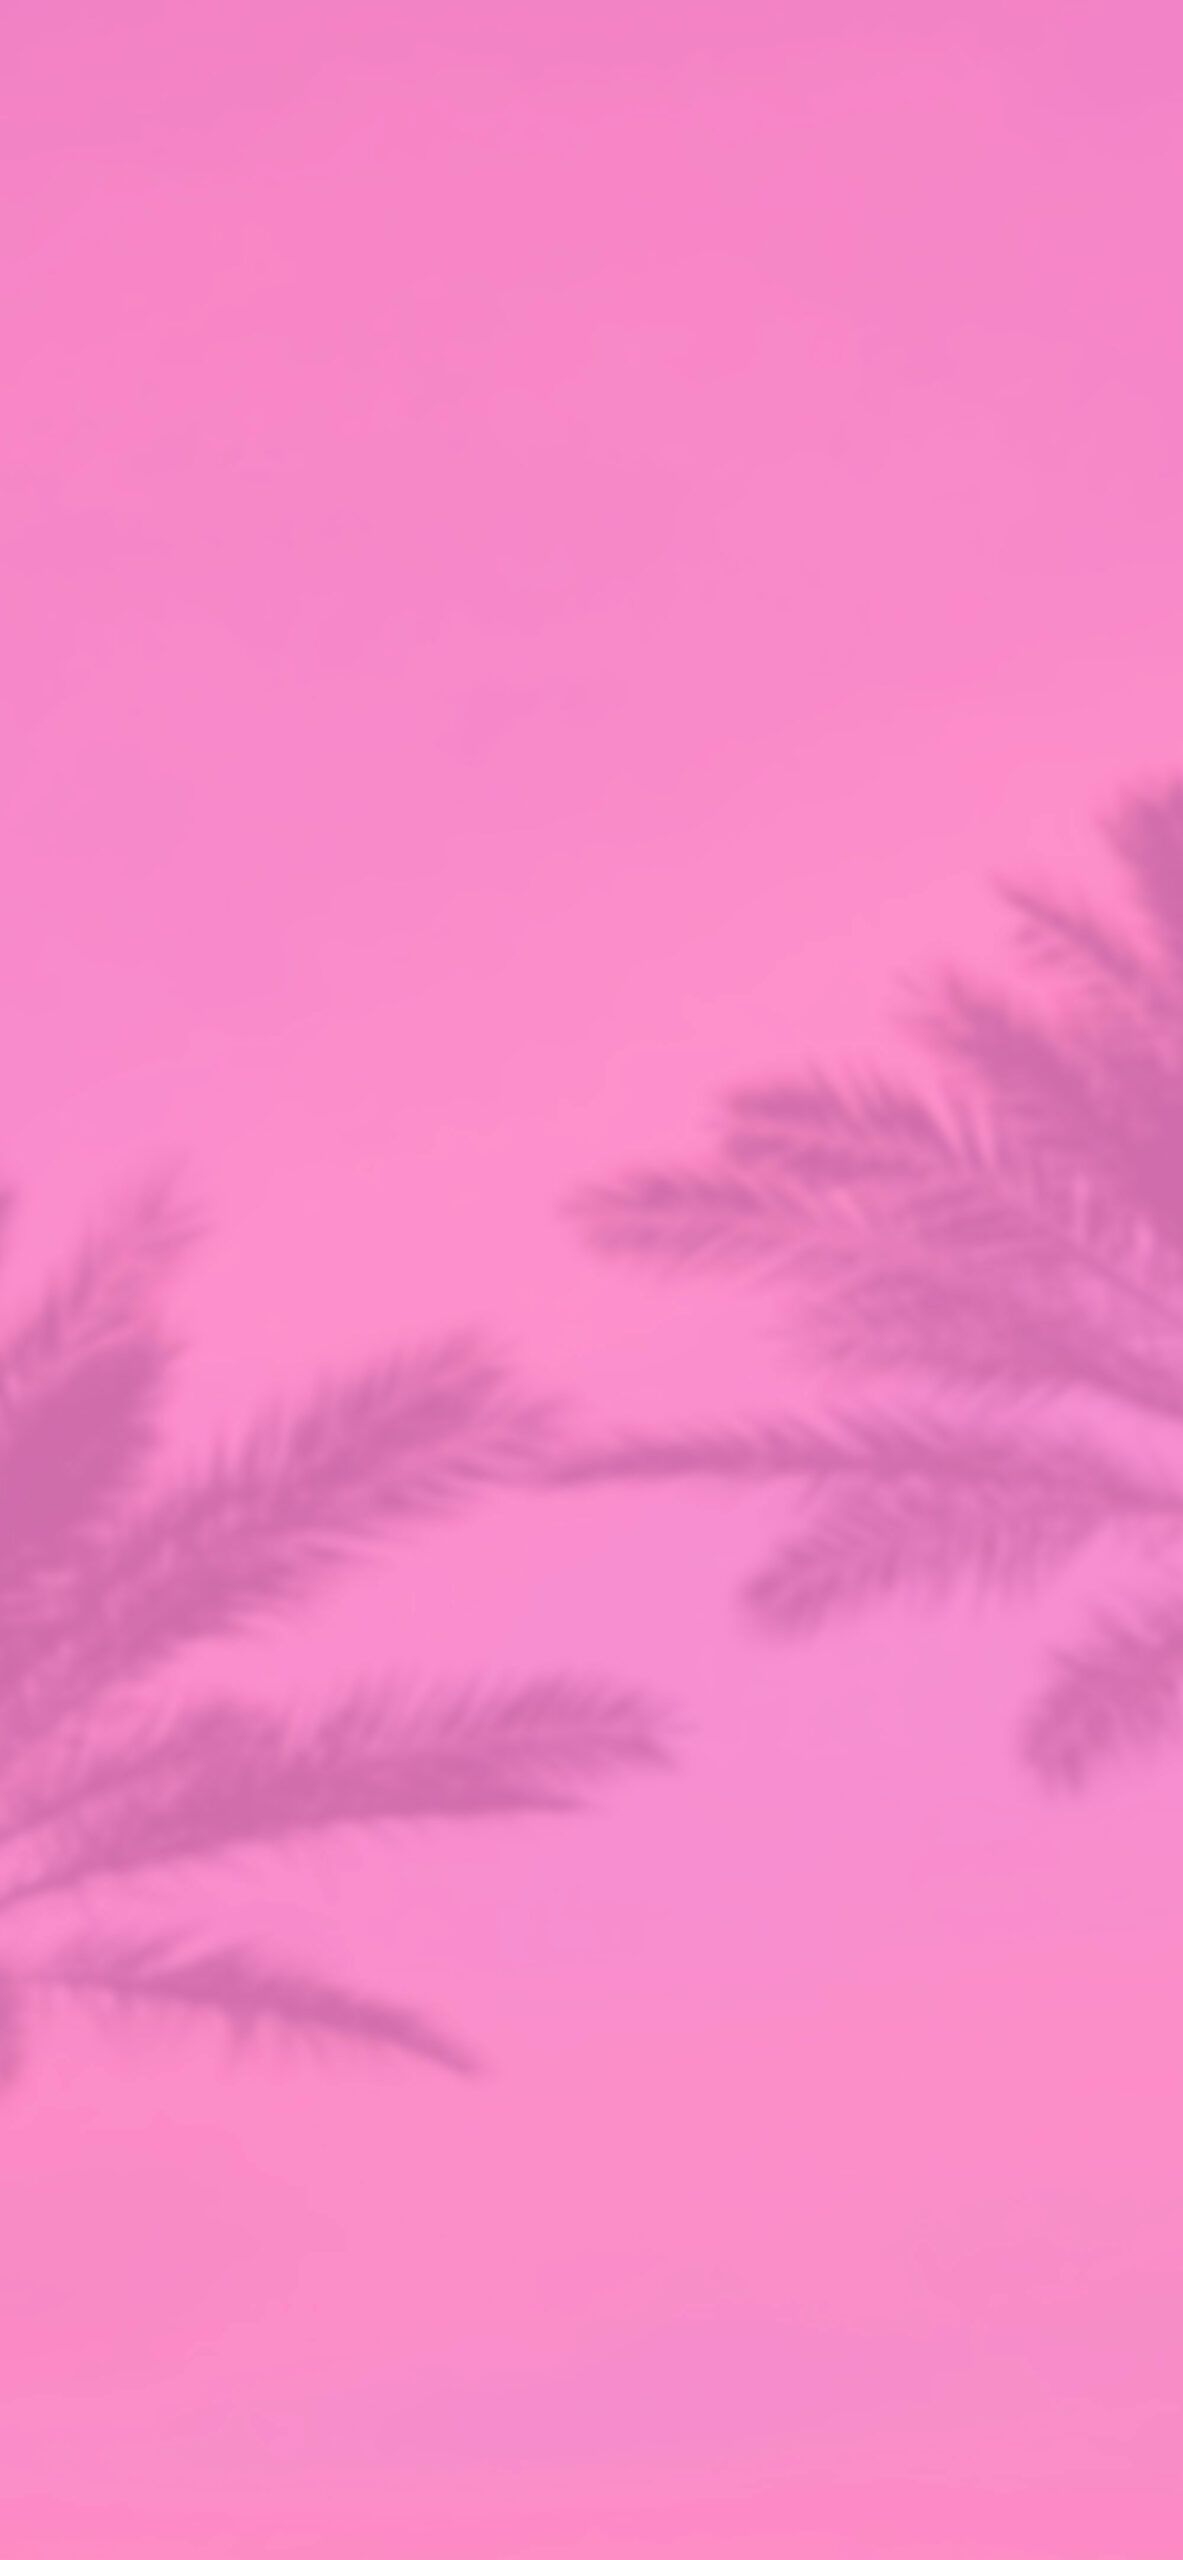  Rosa Hintergrundbild 1183x2560. Aesthetic Pink Wallpaper Pink Aesthetic Wallpaper for iPhone Free